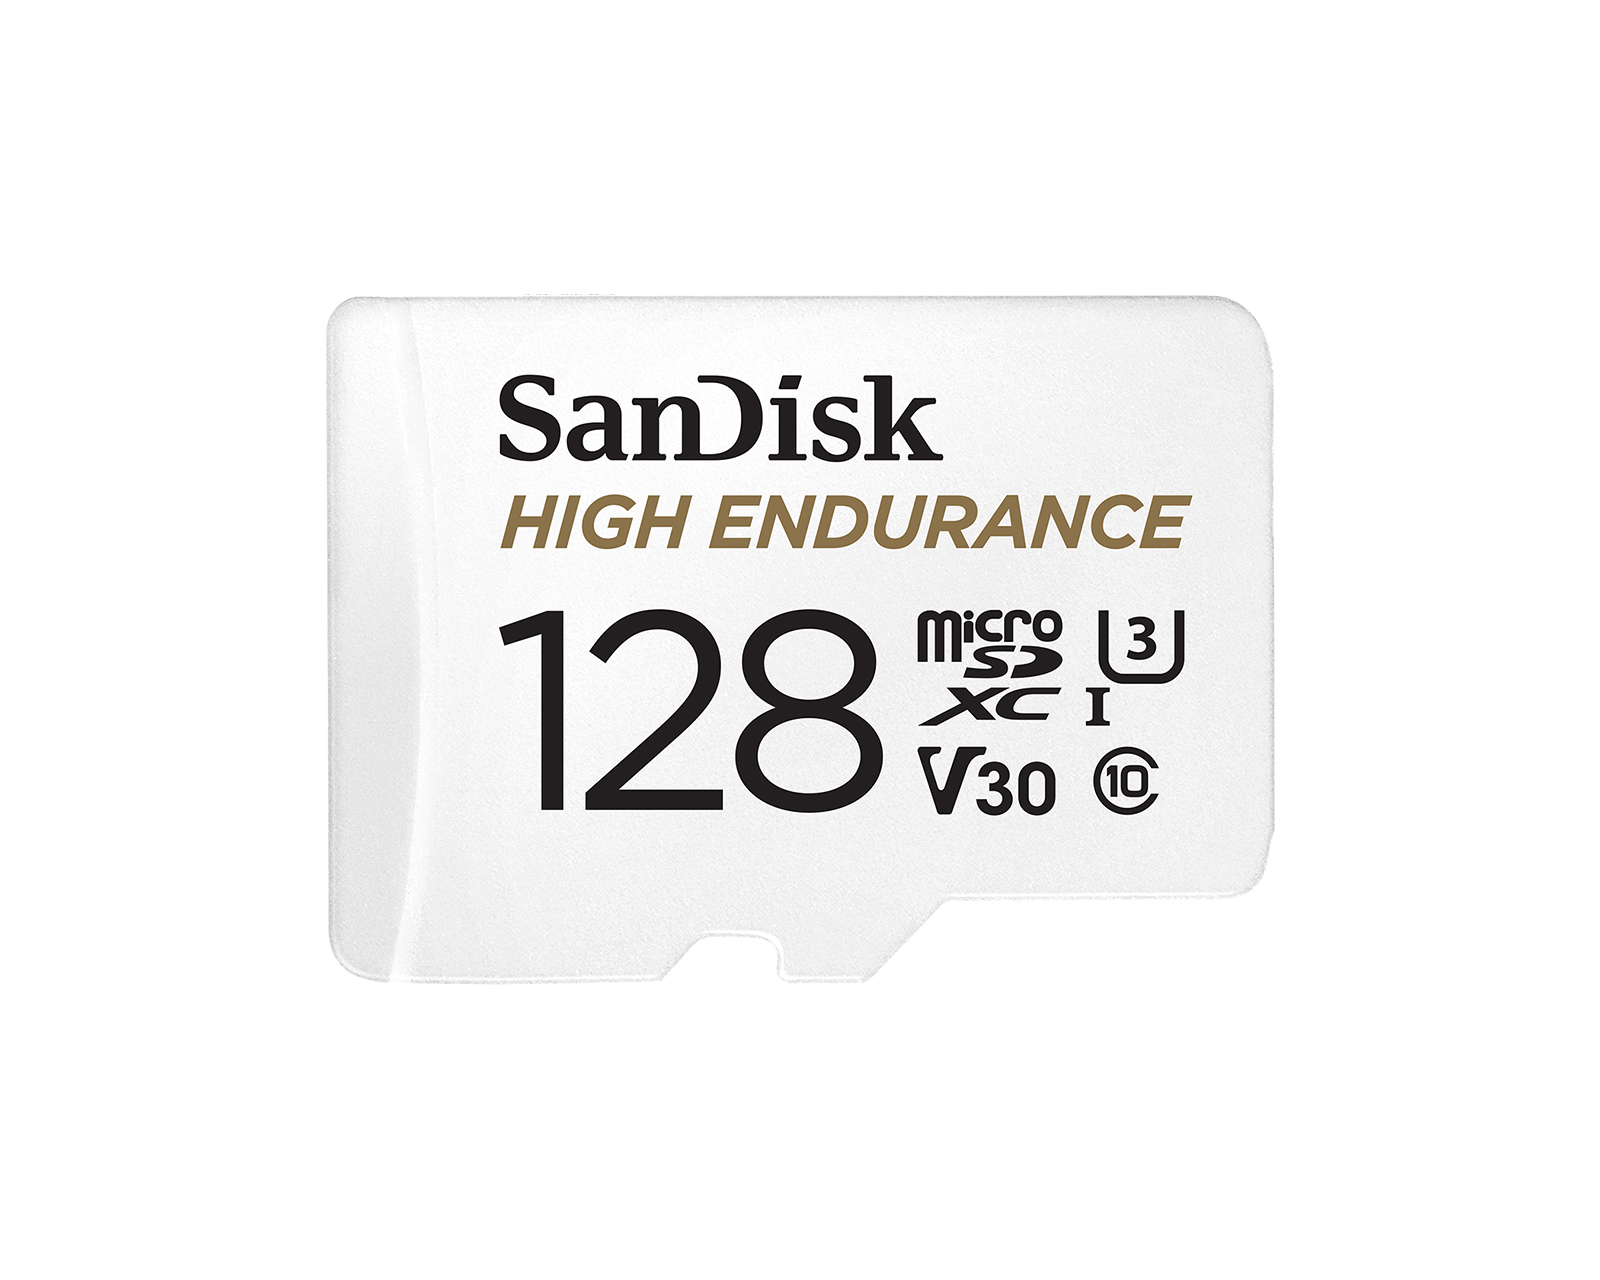 Giraf At passe lille Buy SanDisk High Endurance microSDXC Card - 128GB at us.MaxGaming.com